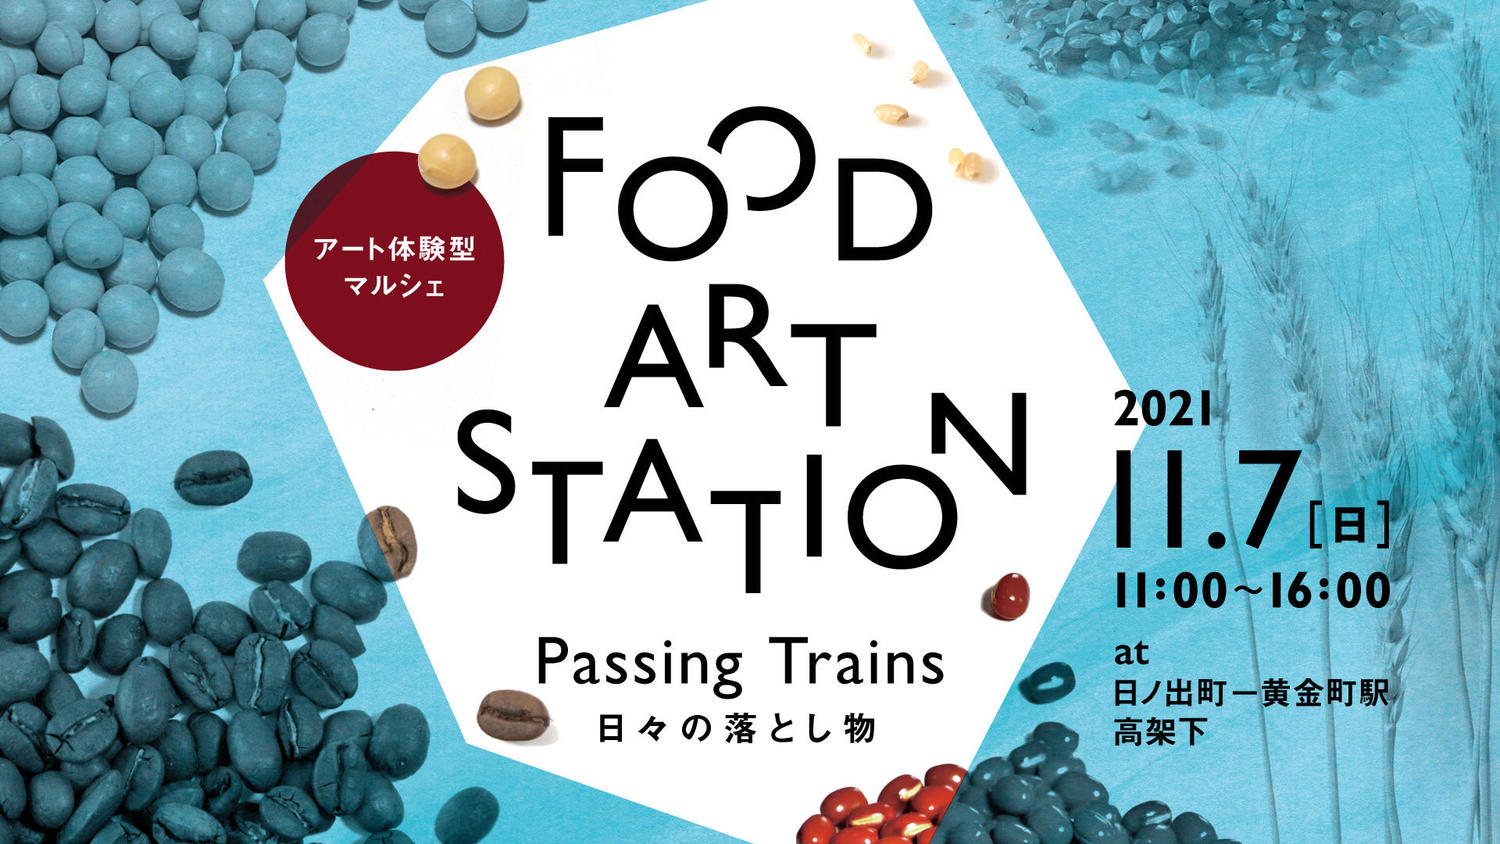 FOOD-ART-STATION.jpg